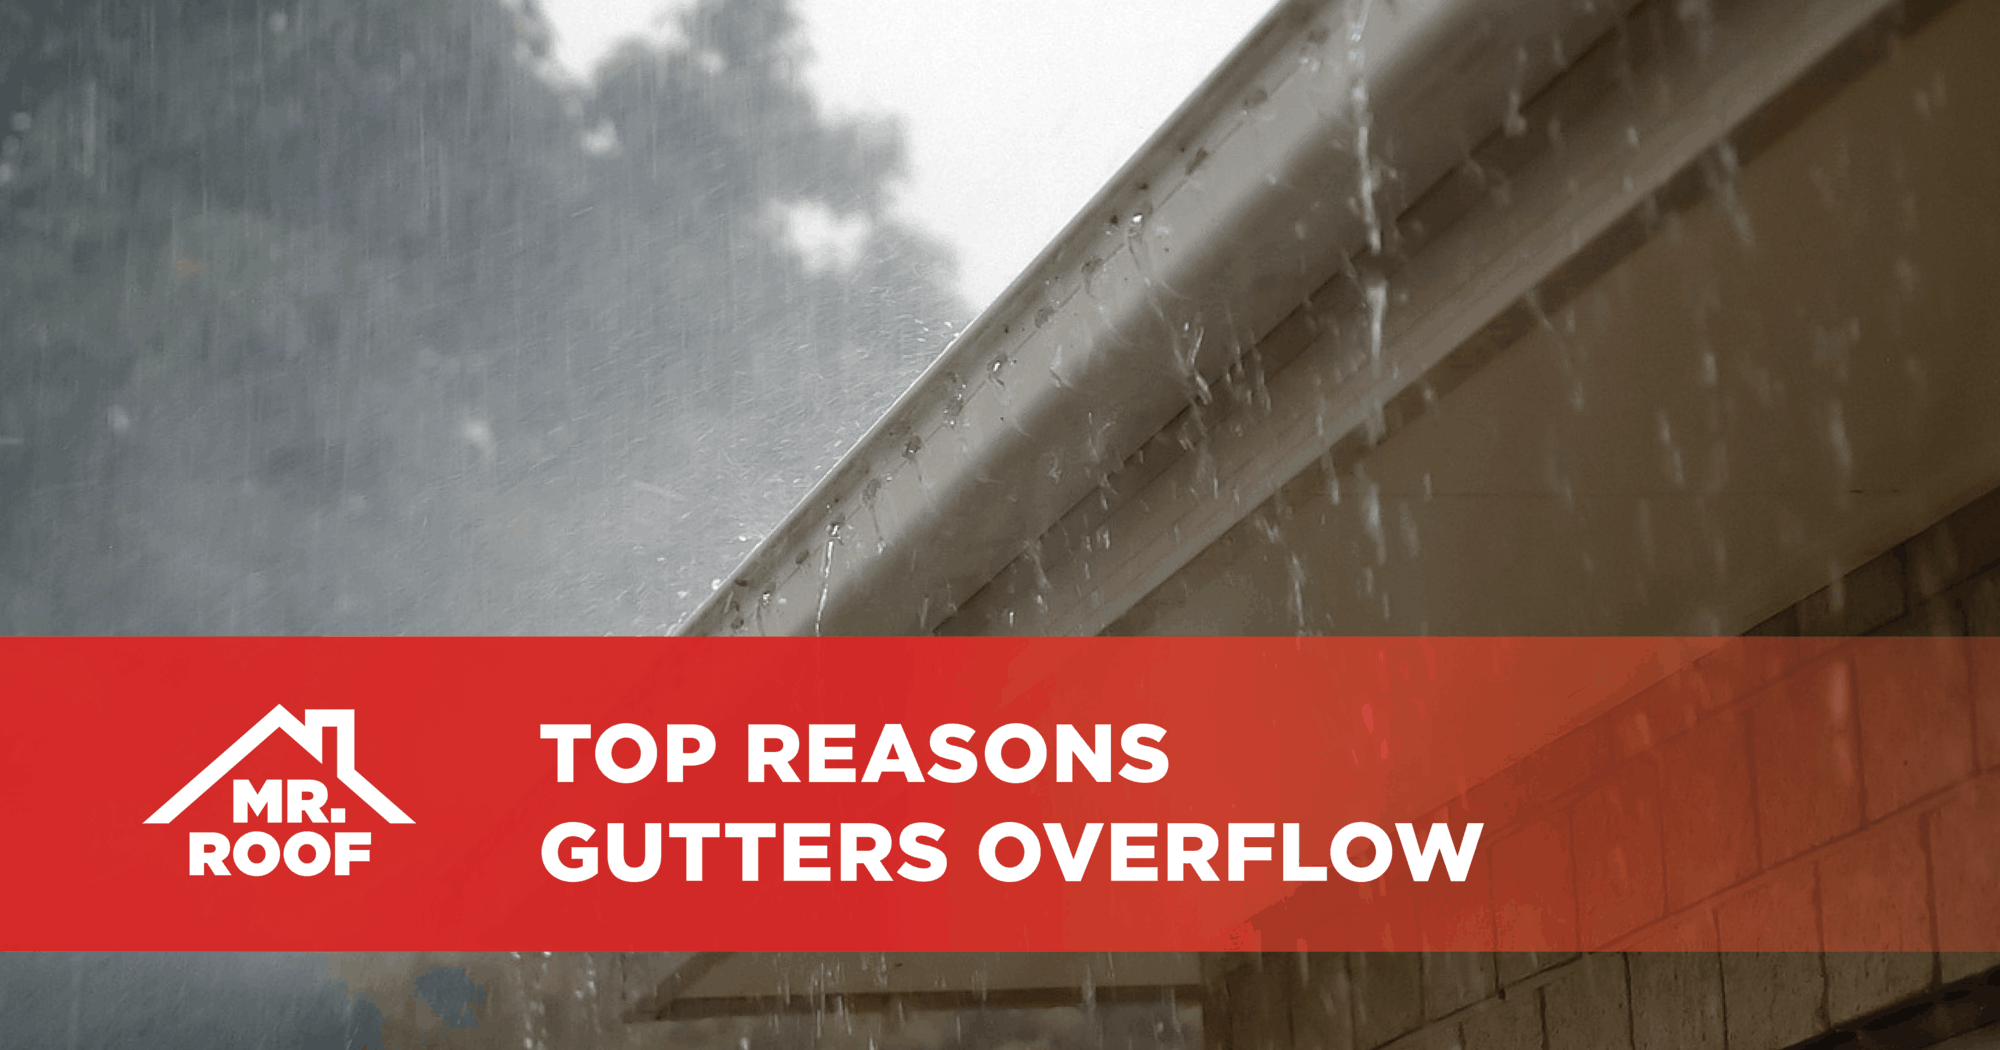 Top reasons gutters overflow